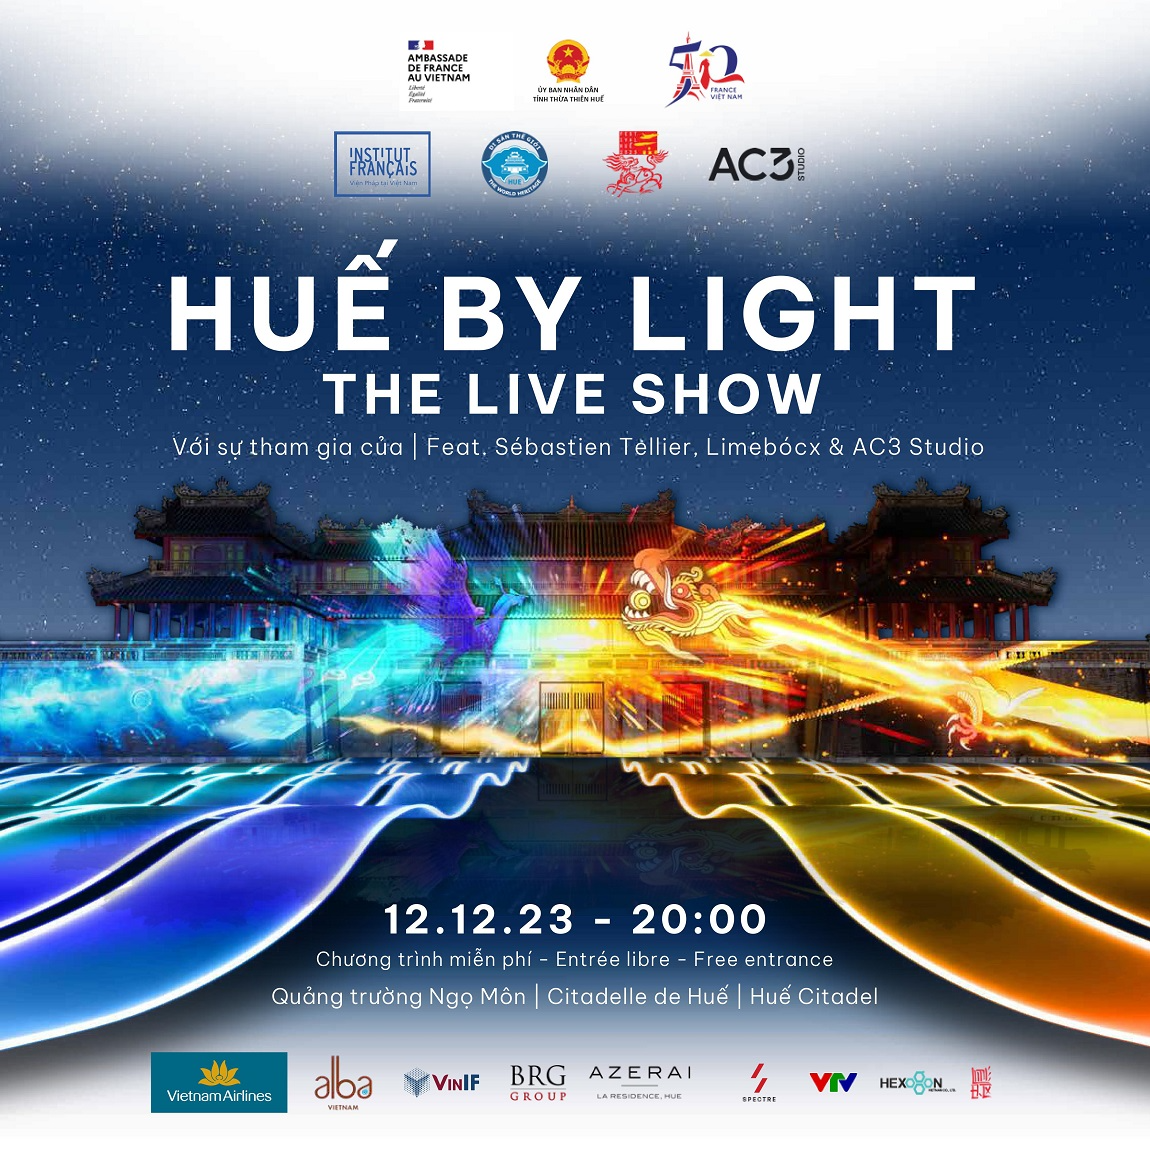 Hue-by-light-the-live-show-ivivu